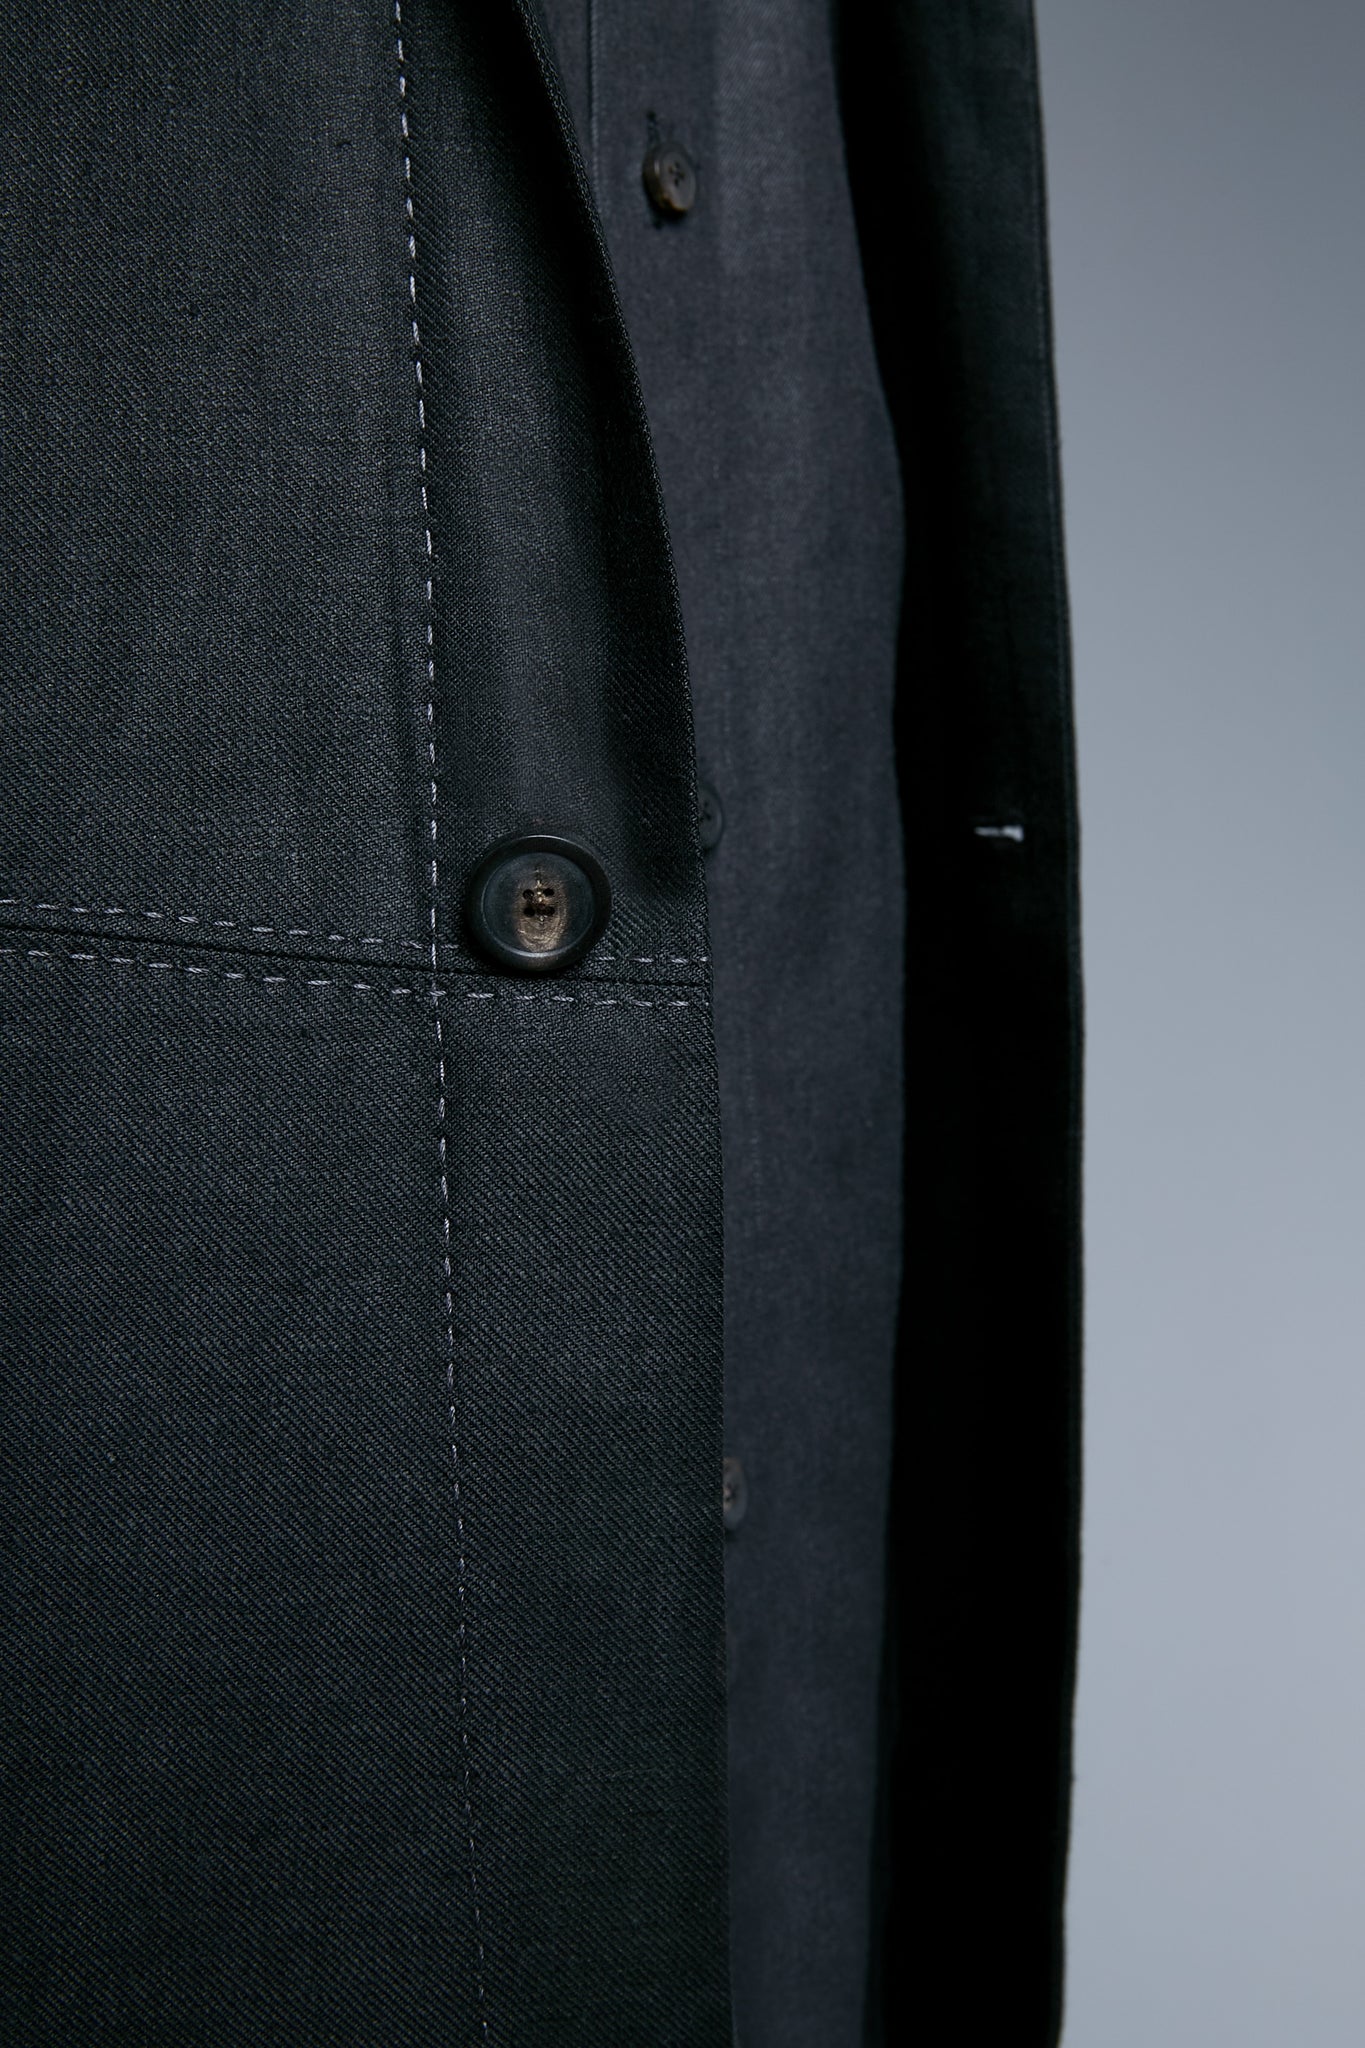 Detail View: Model Milos Drago wearing Architect's Jacket